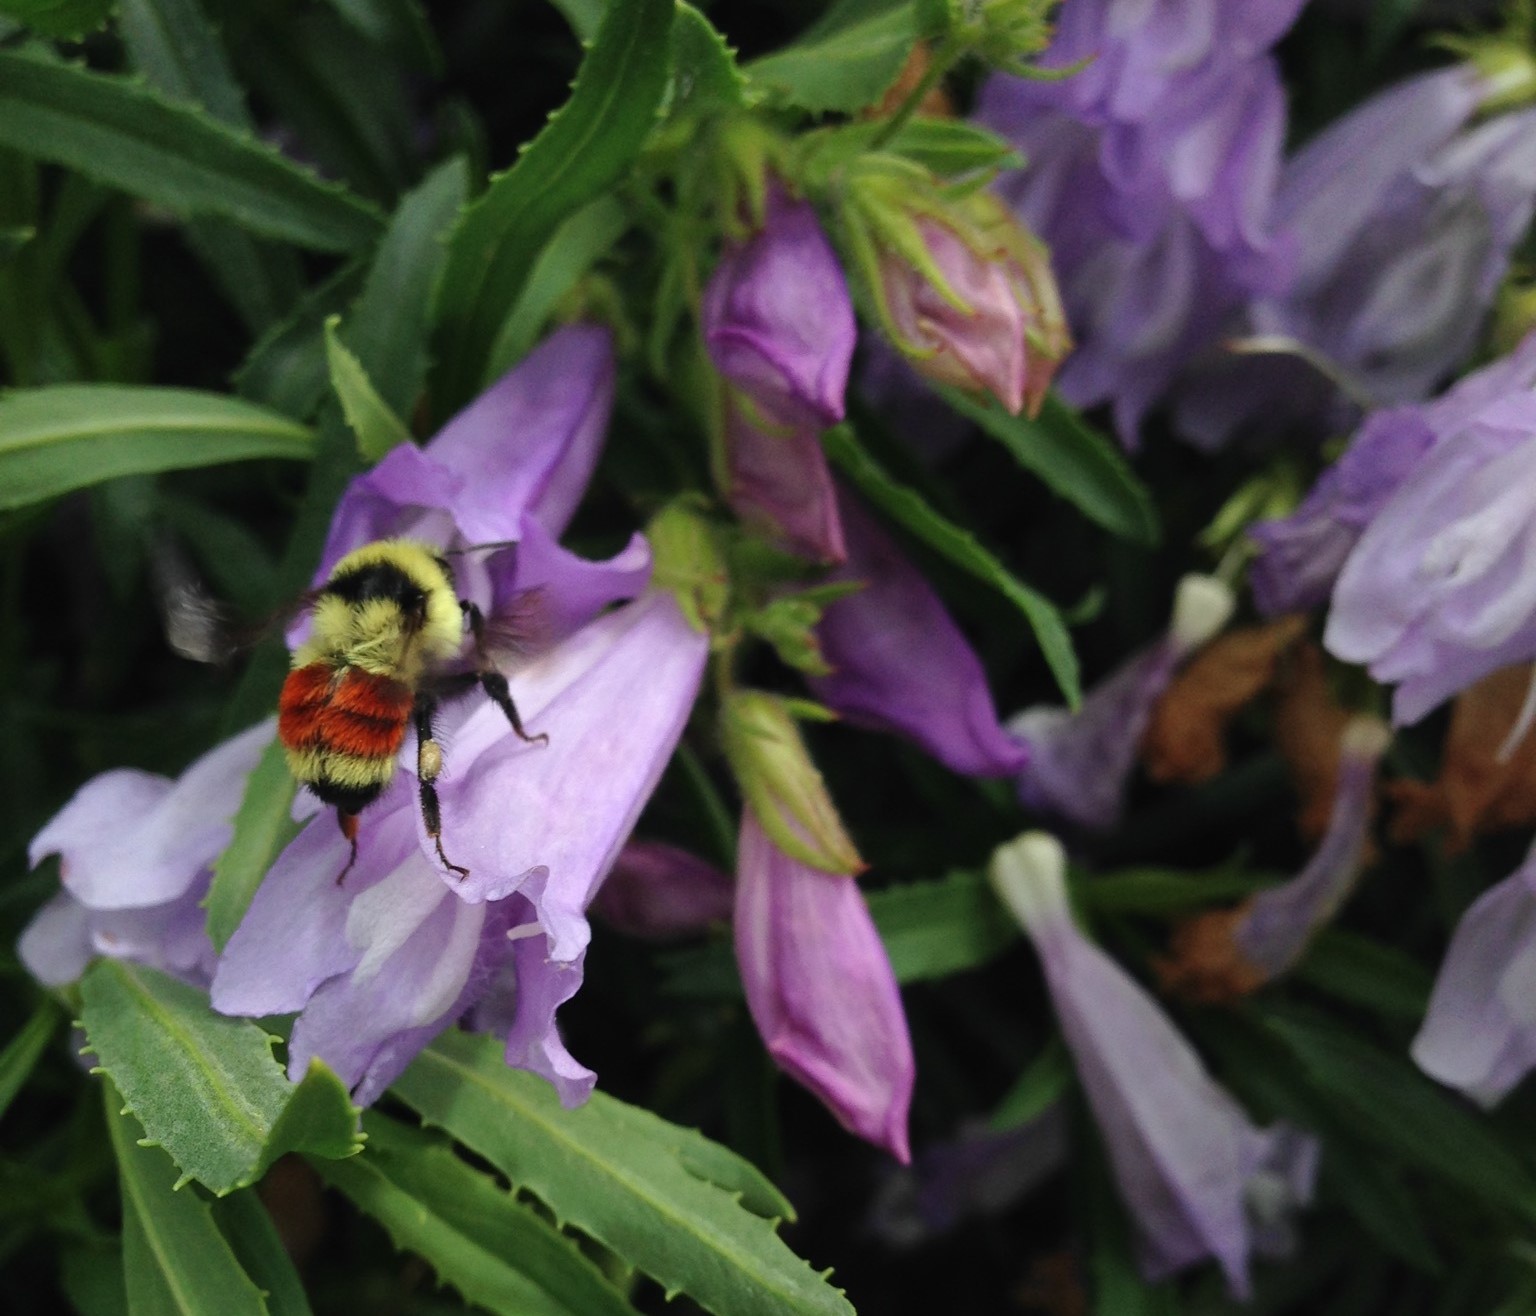 Bumblebee visiting a Penstemon flower